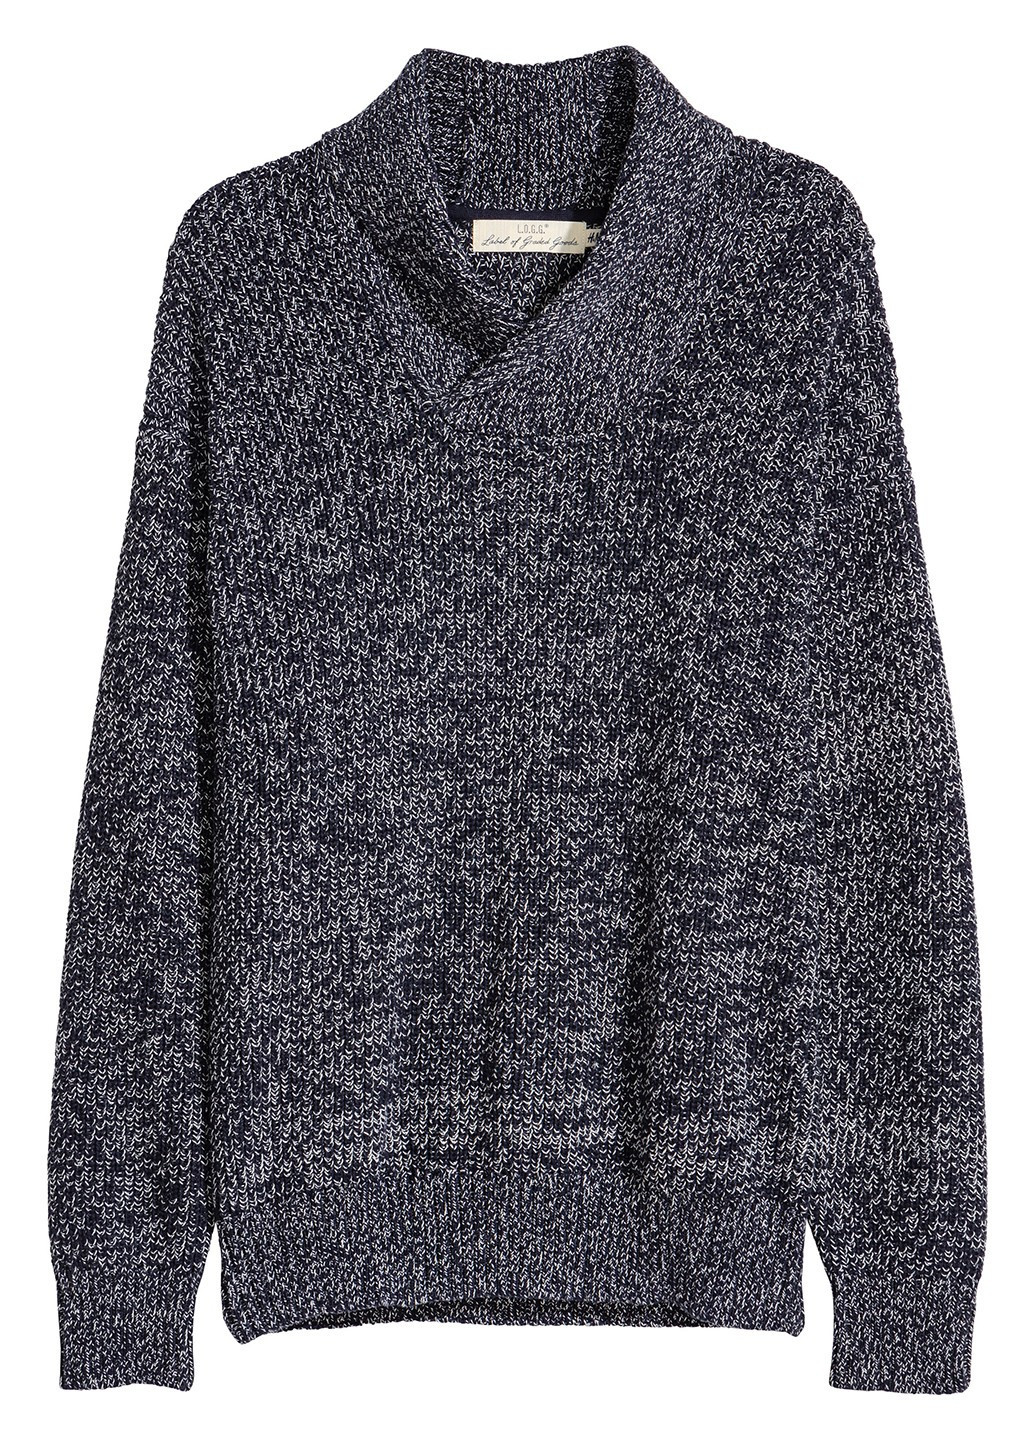 Темно-серый зимний пуловер пуловер H&M